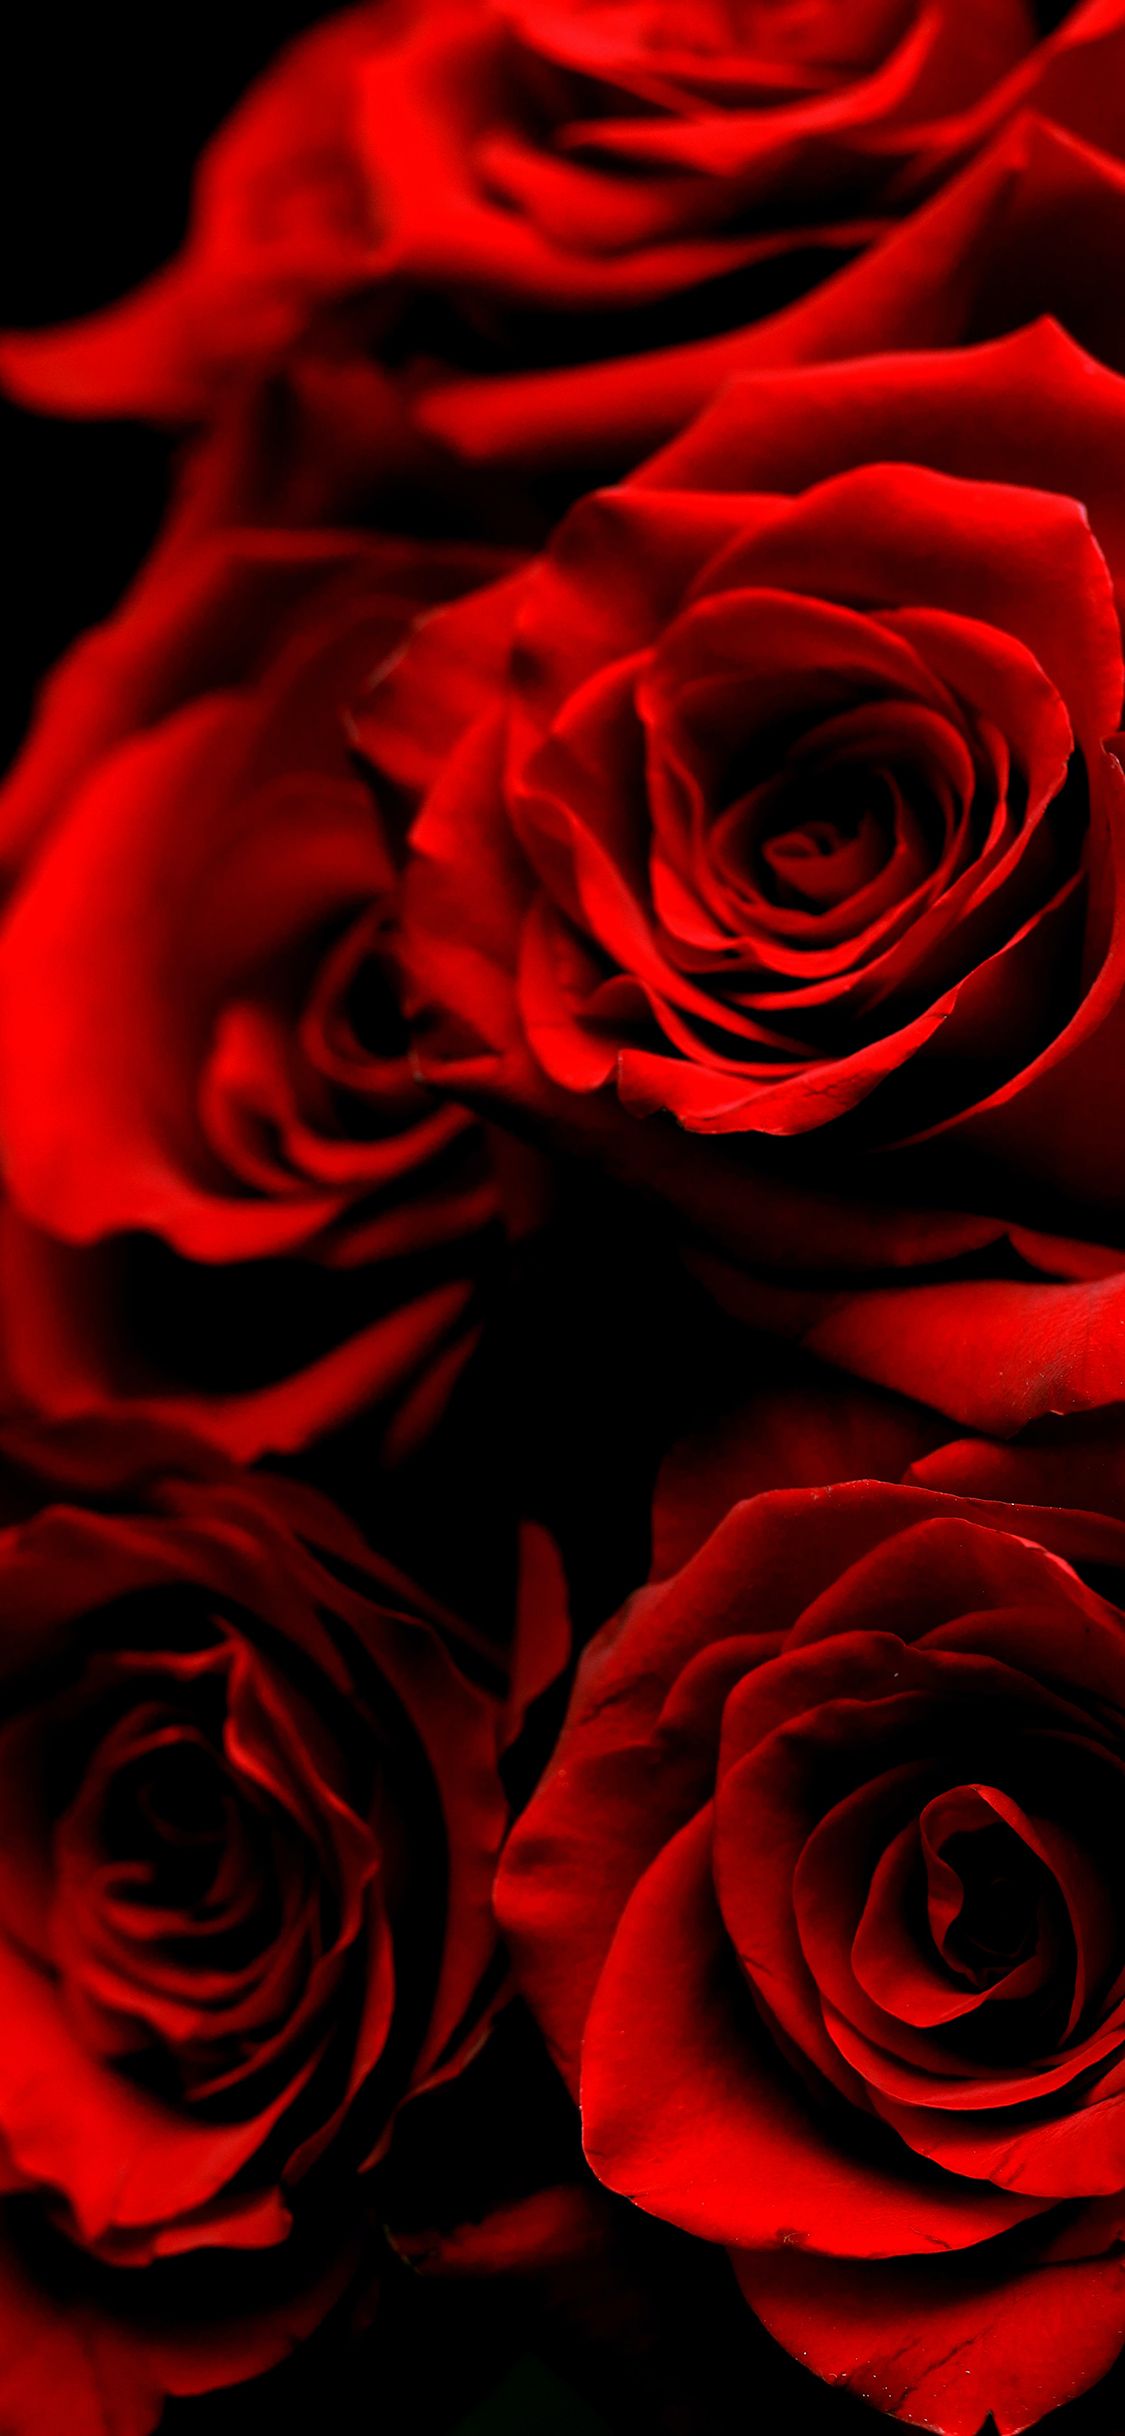 Beautiful Rose iPhone Wallpaper (HD Quality)